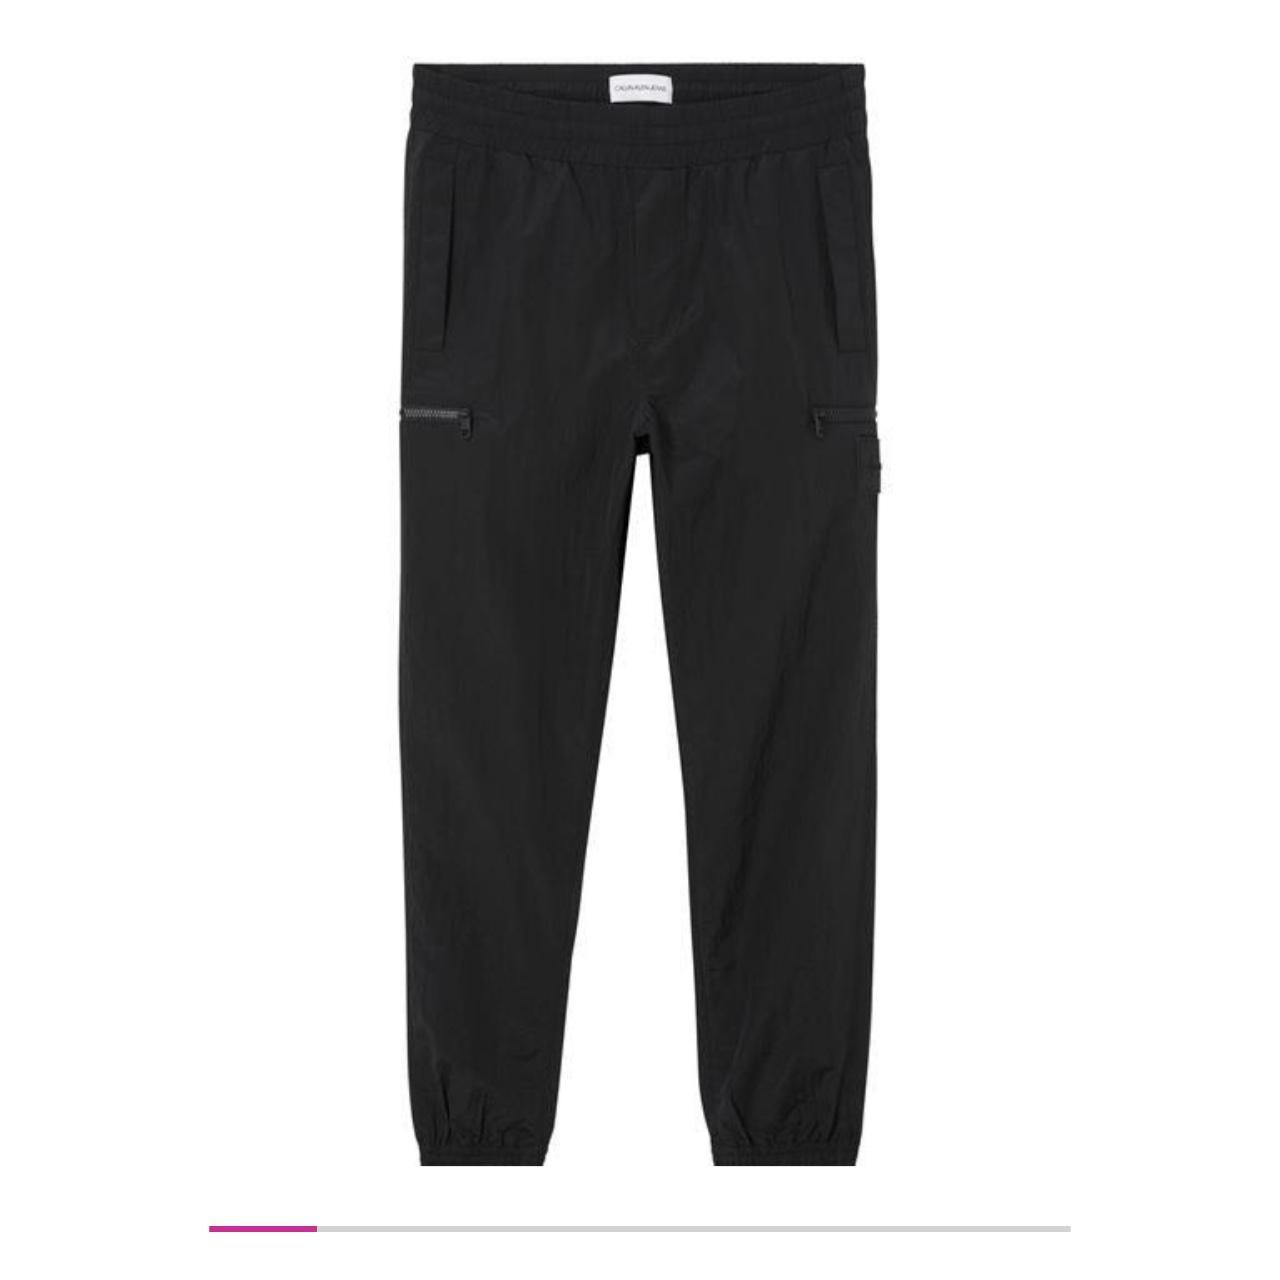 Calvin Klein Jeans Ripstop Jogging Pants open to... - Depop